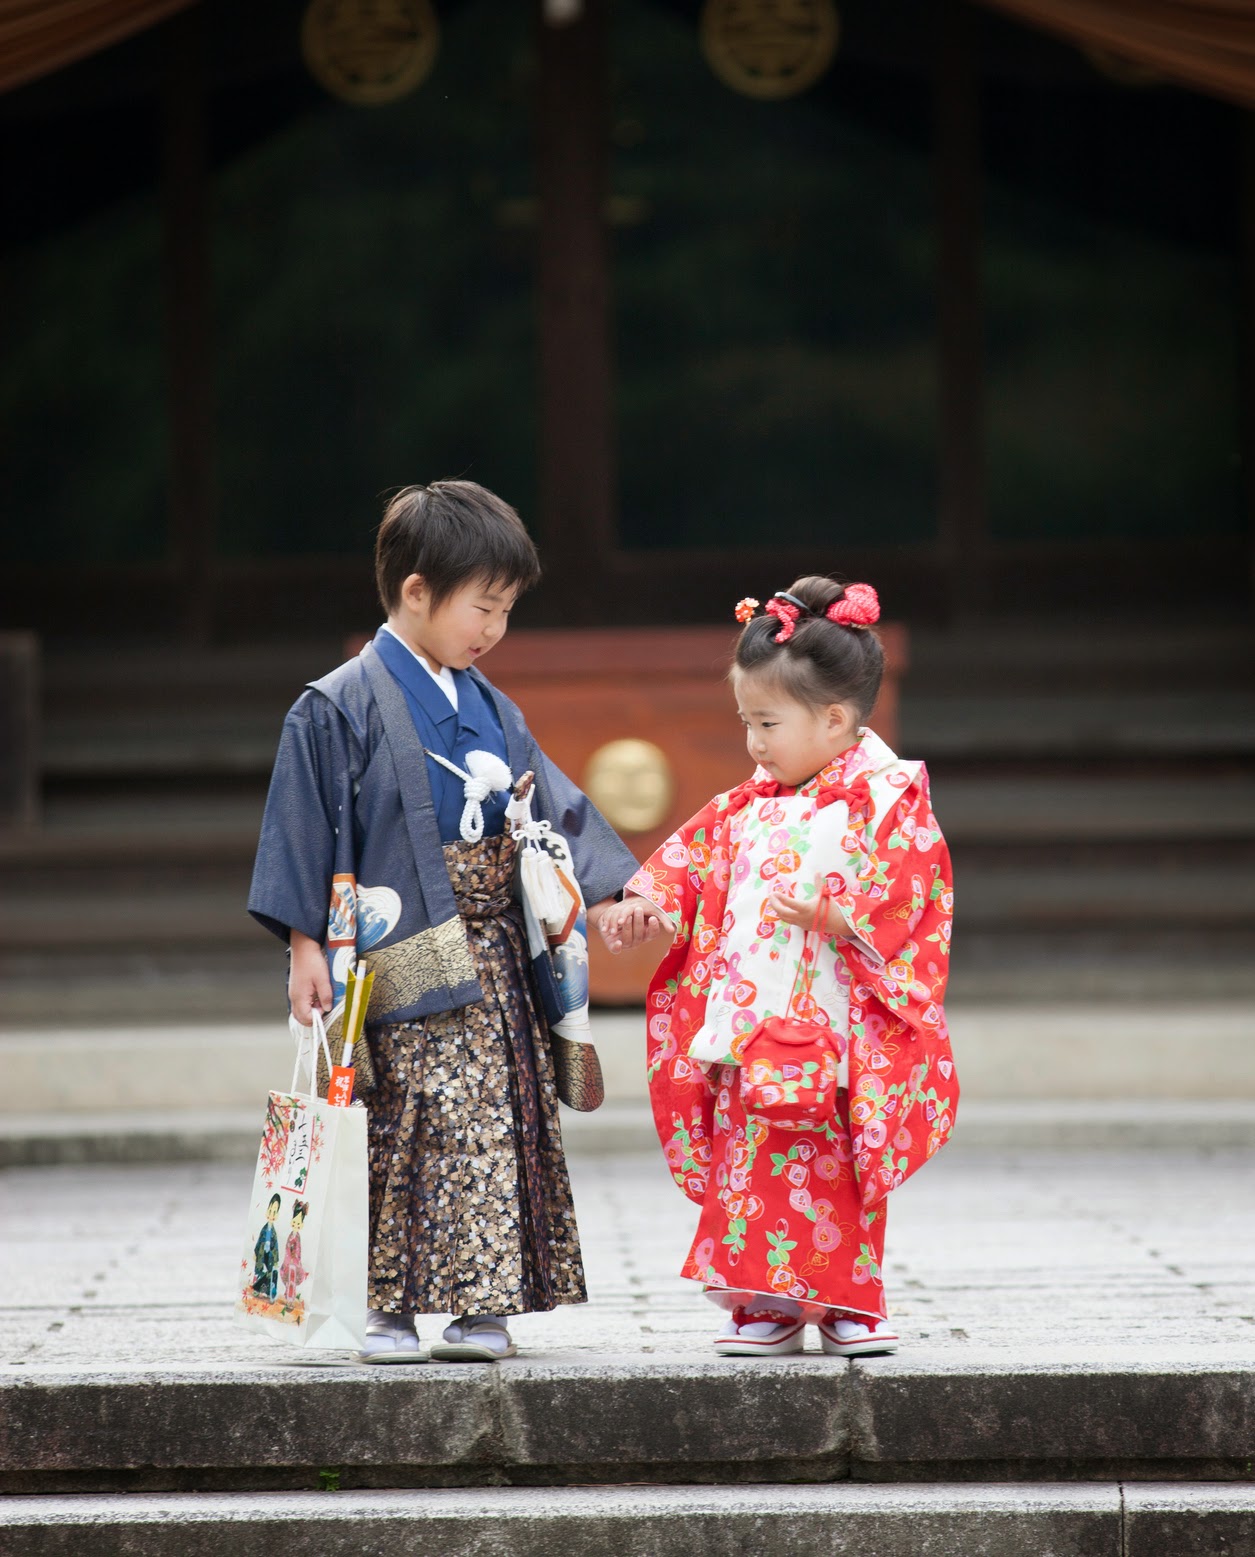 Yusuke Japan Blog: One of Japanese traditions for children – Shichi-Go-San